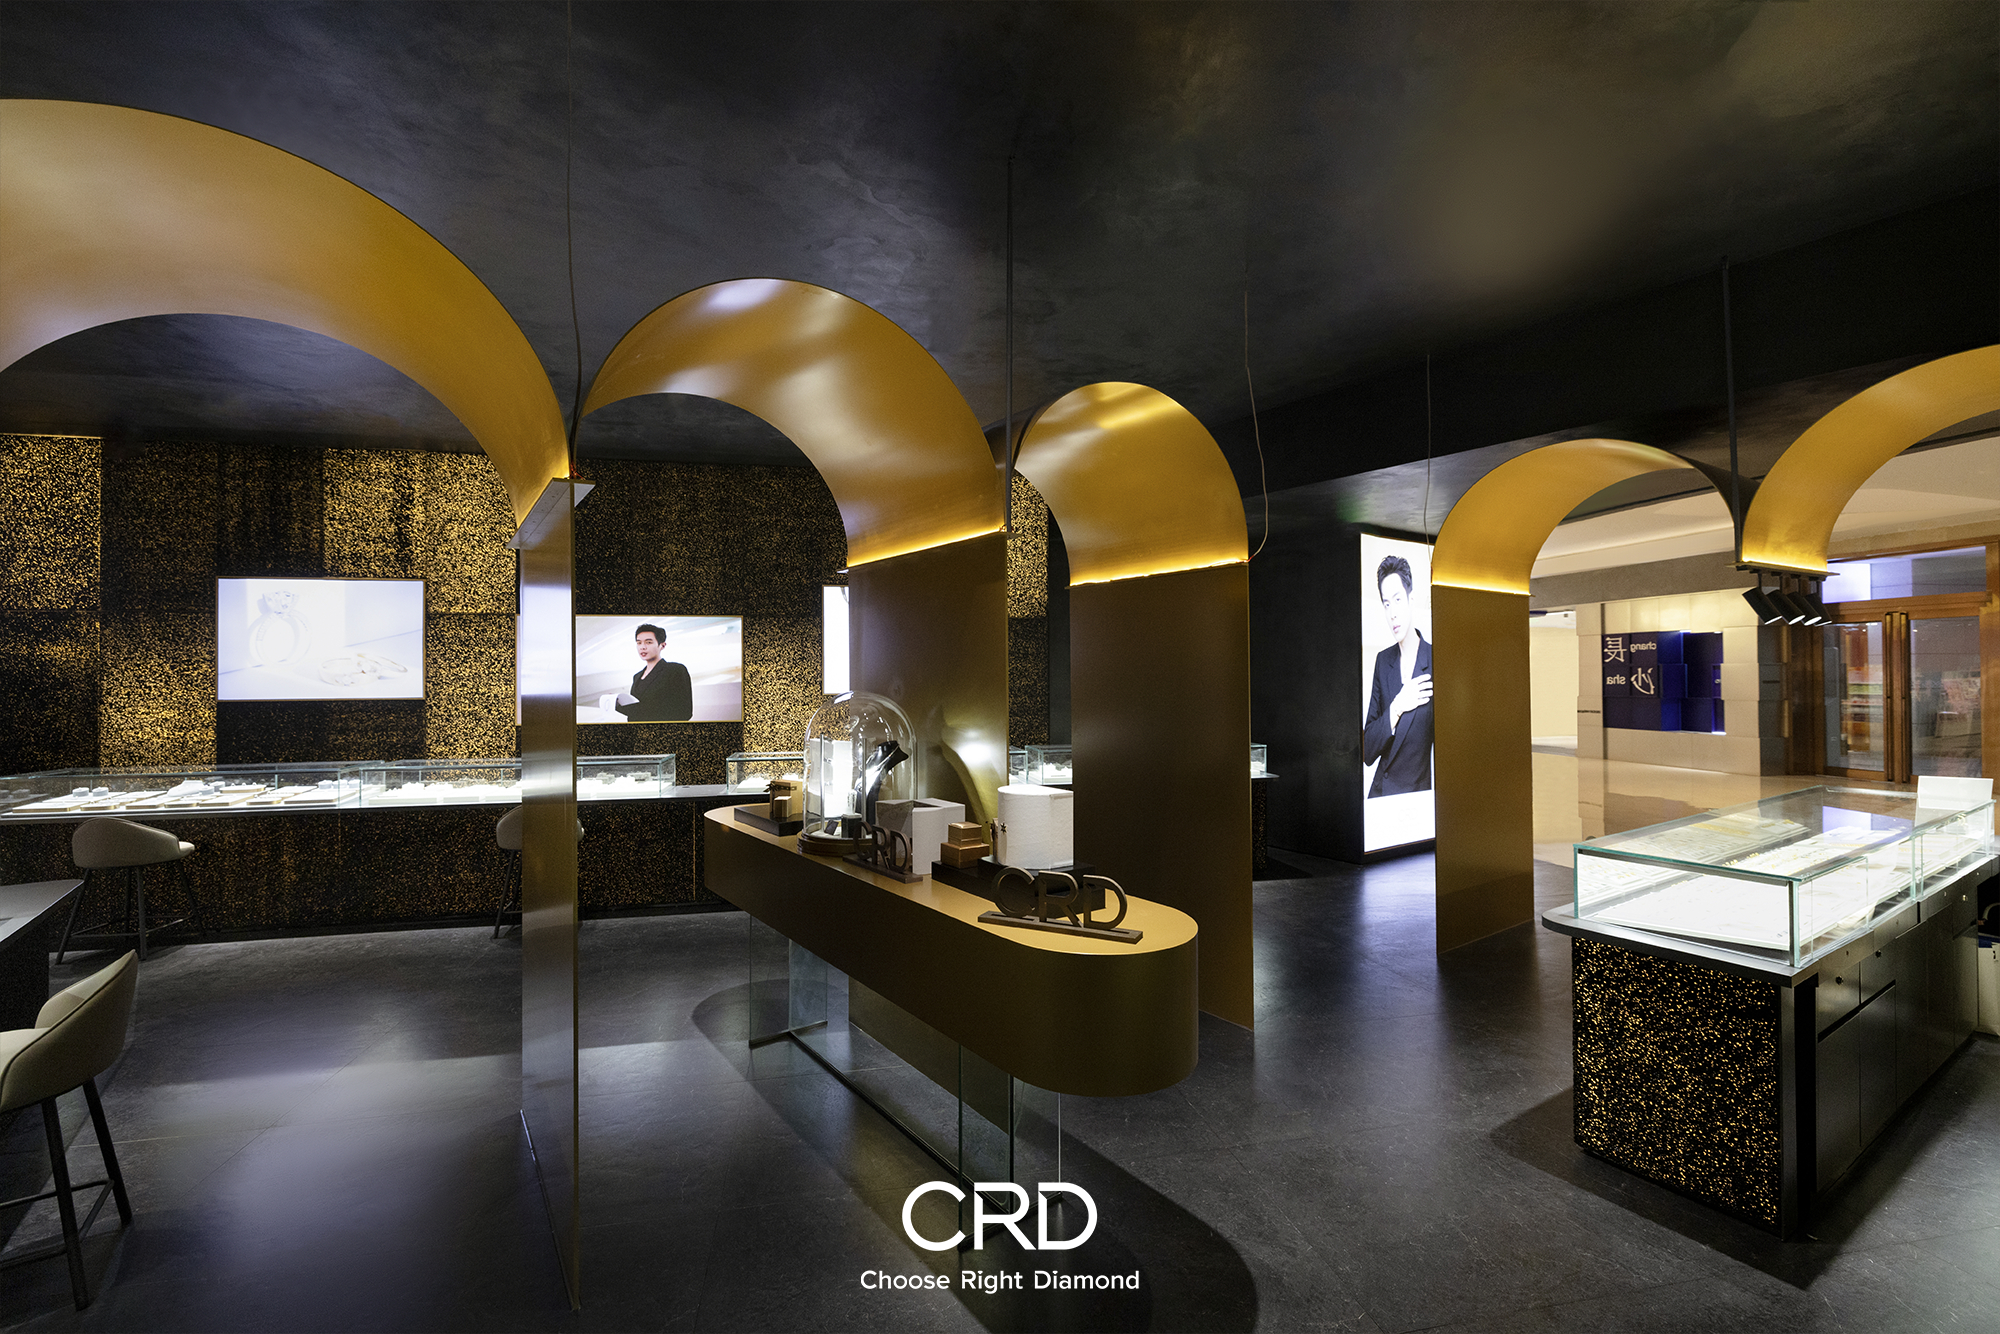 CRD克徠帝黑金概念主題空間于長沙國金街閃耀揭幕